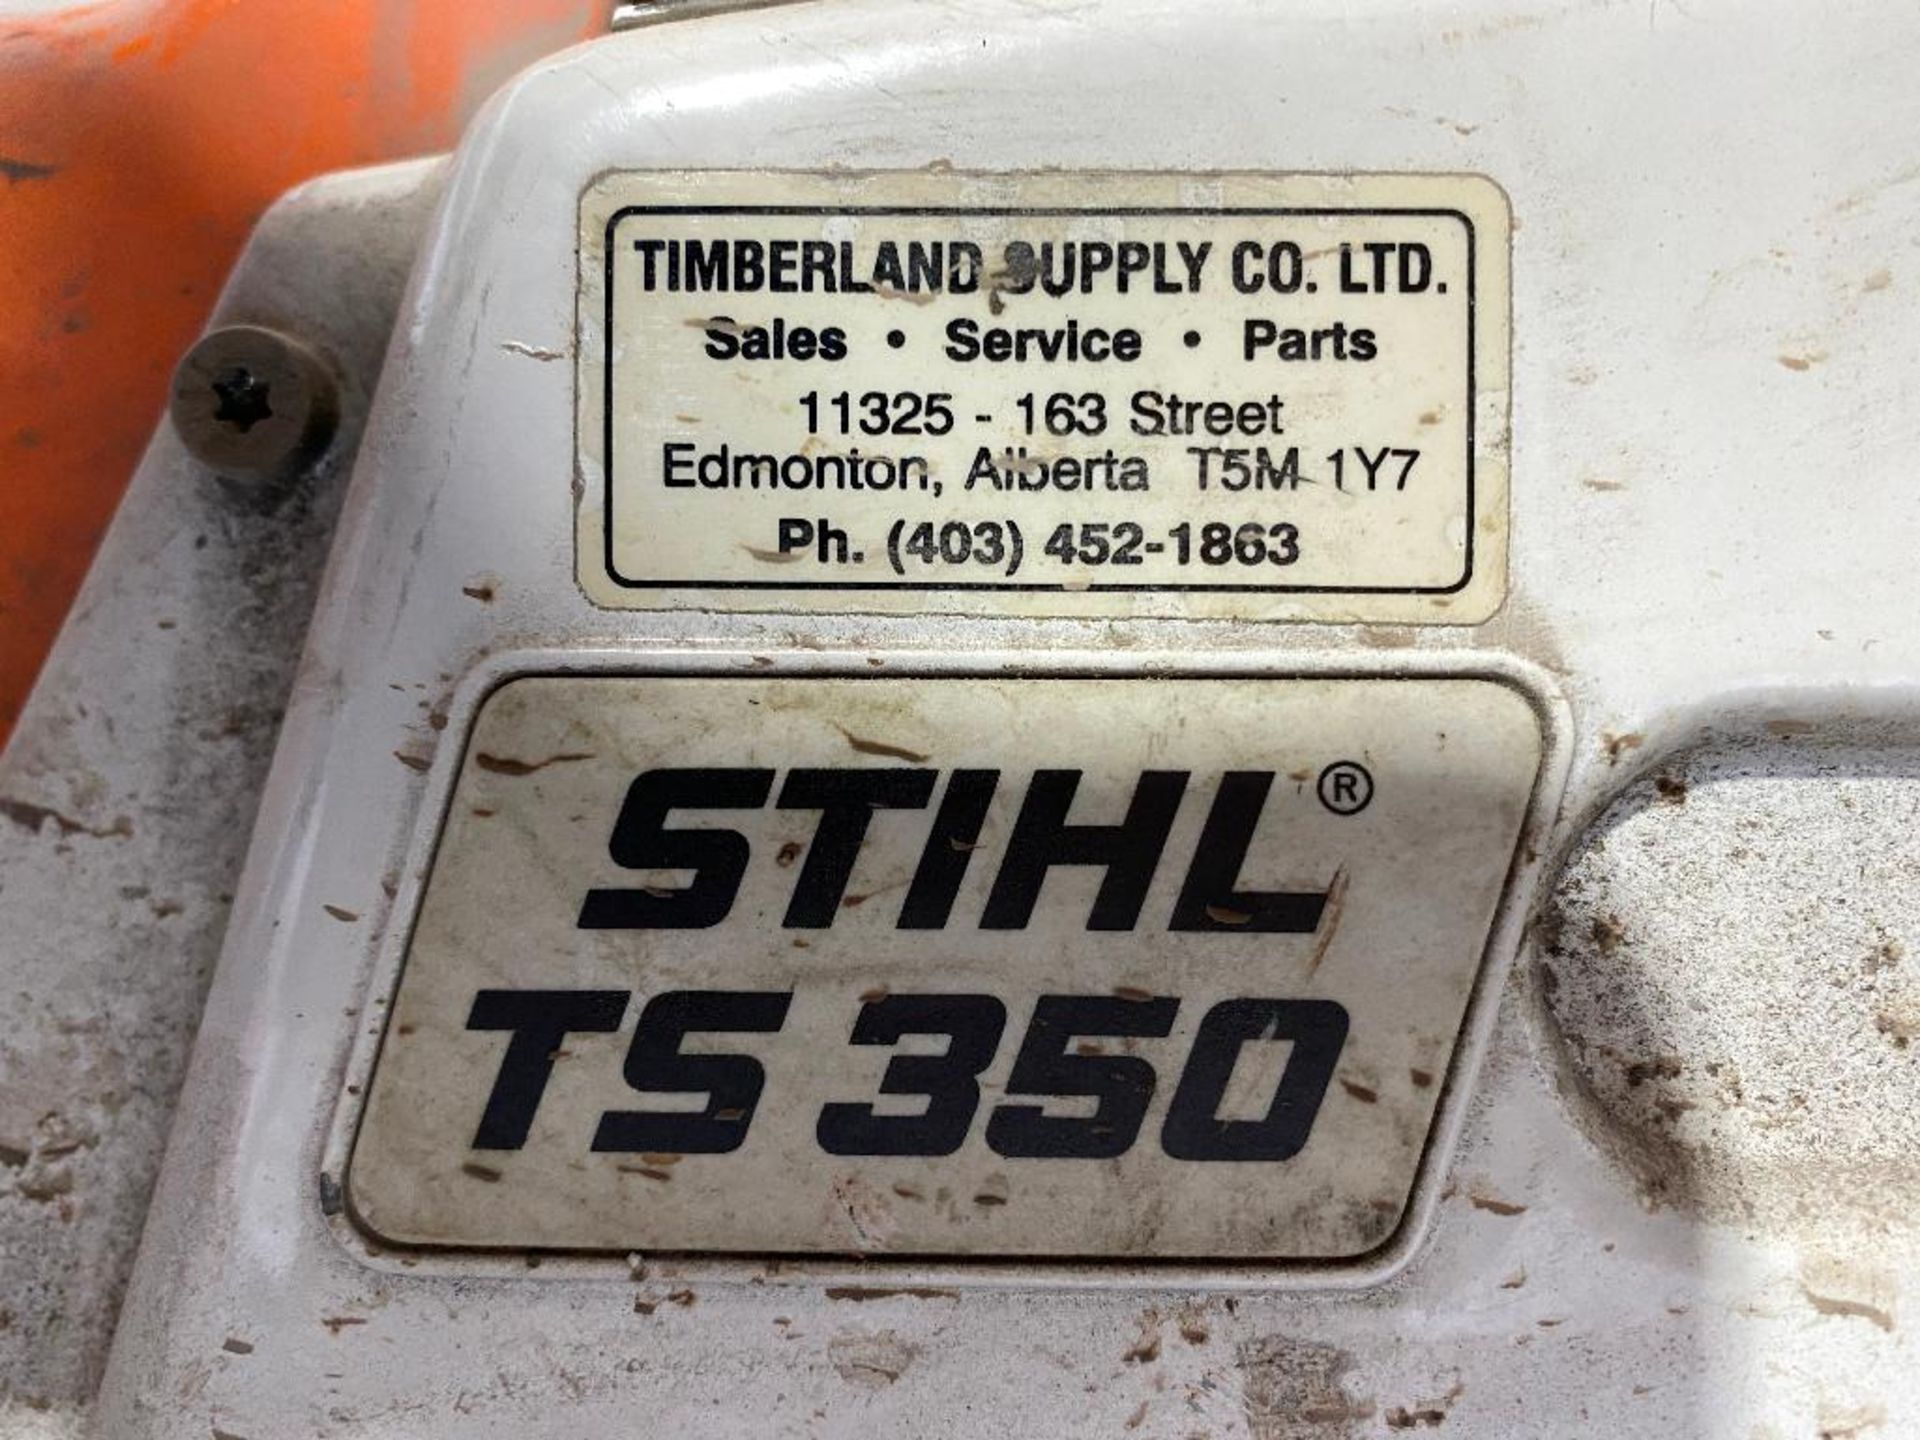 Stihl TS 350 Gas Cut Off Saw w/ Blades, Face Shield, etc. - Image 4 of 6